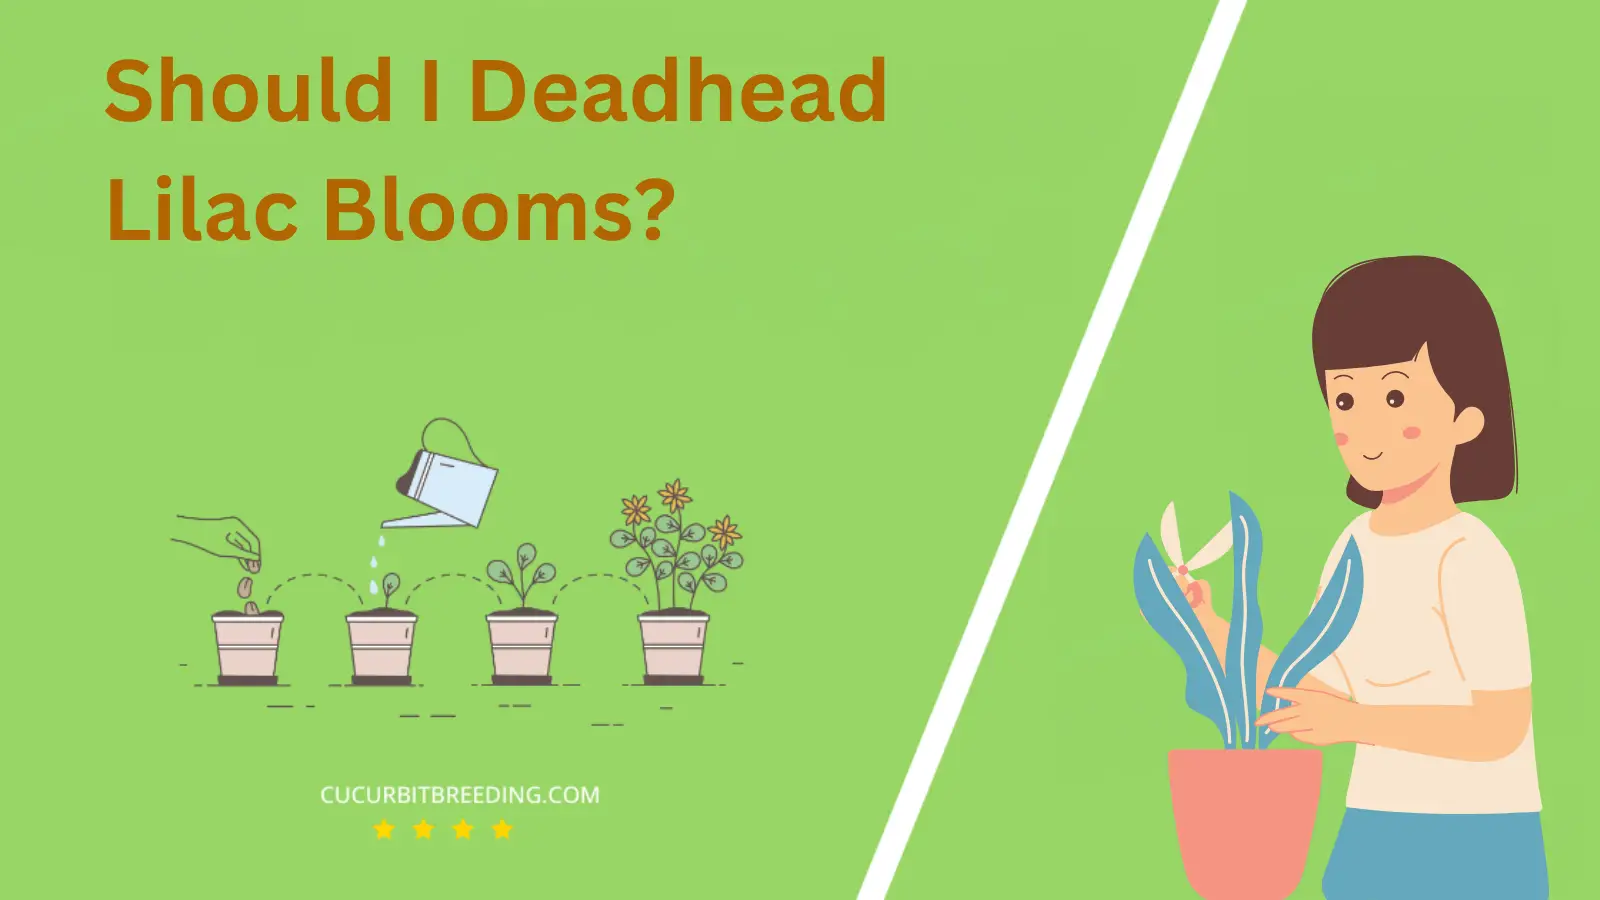 Should I Deadhead Lilac Blooms?